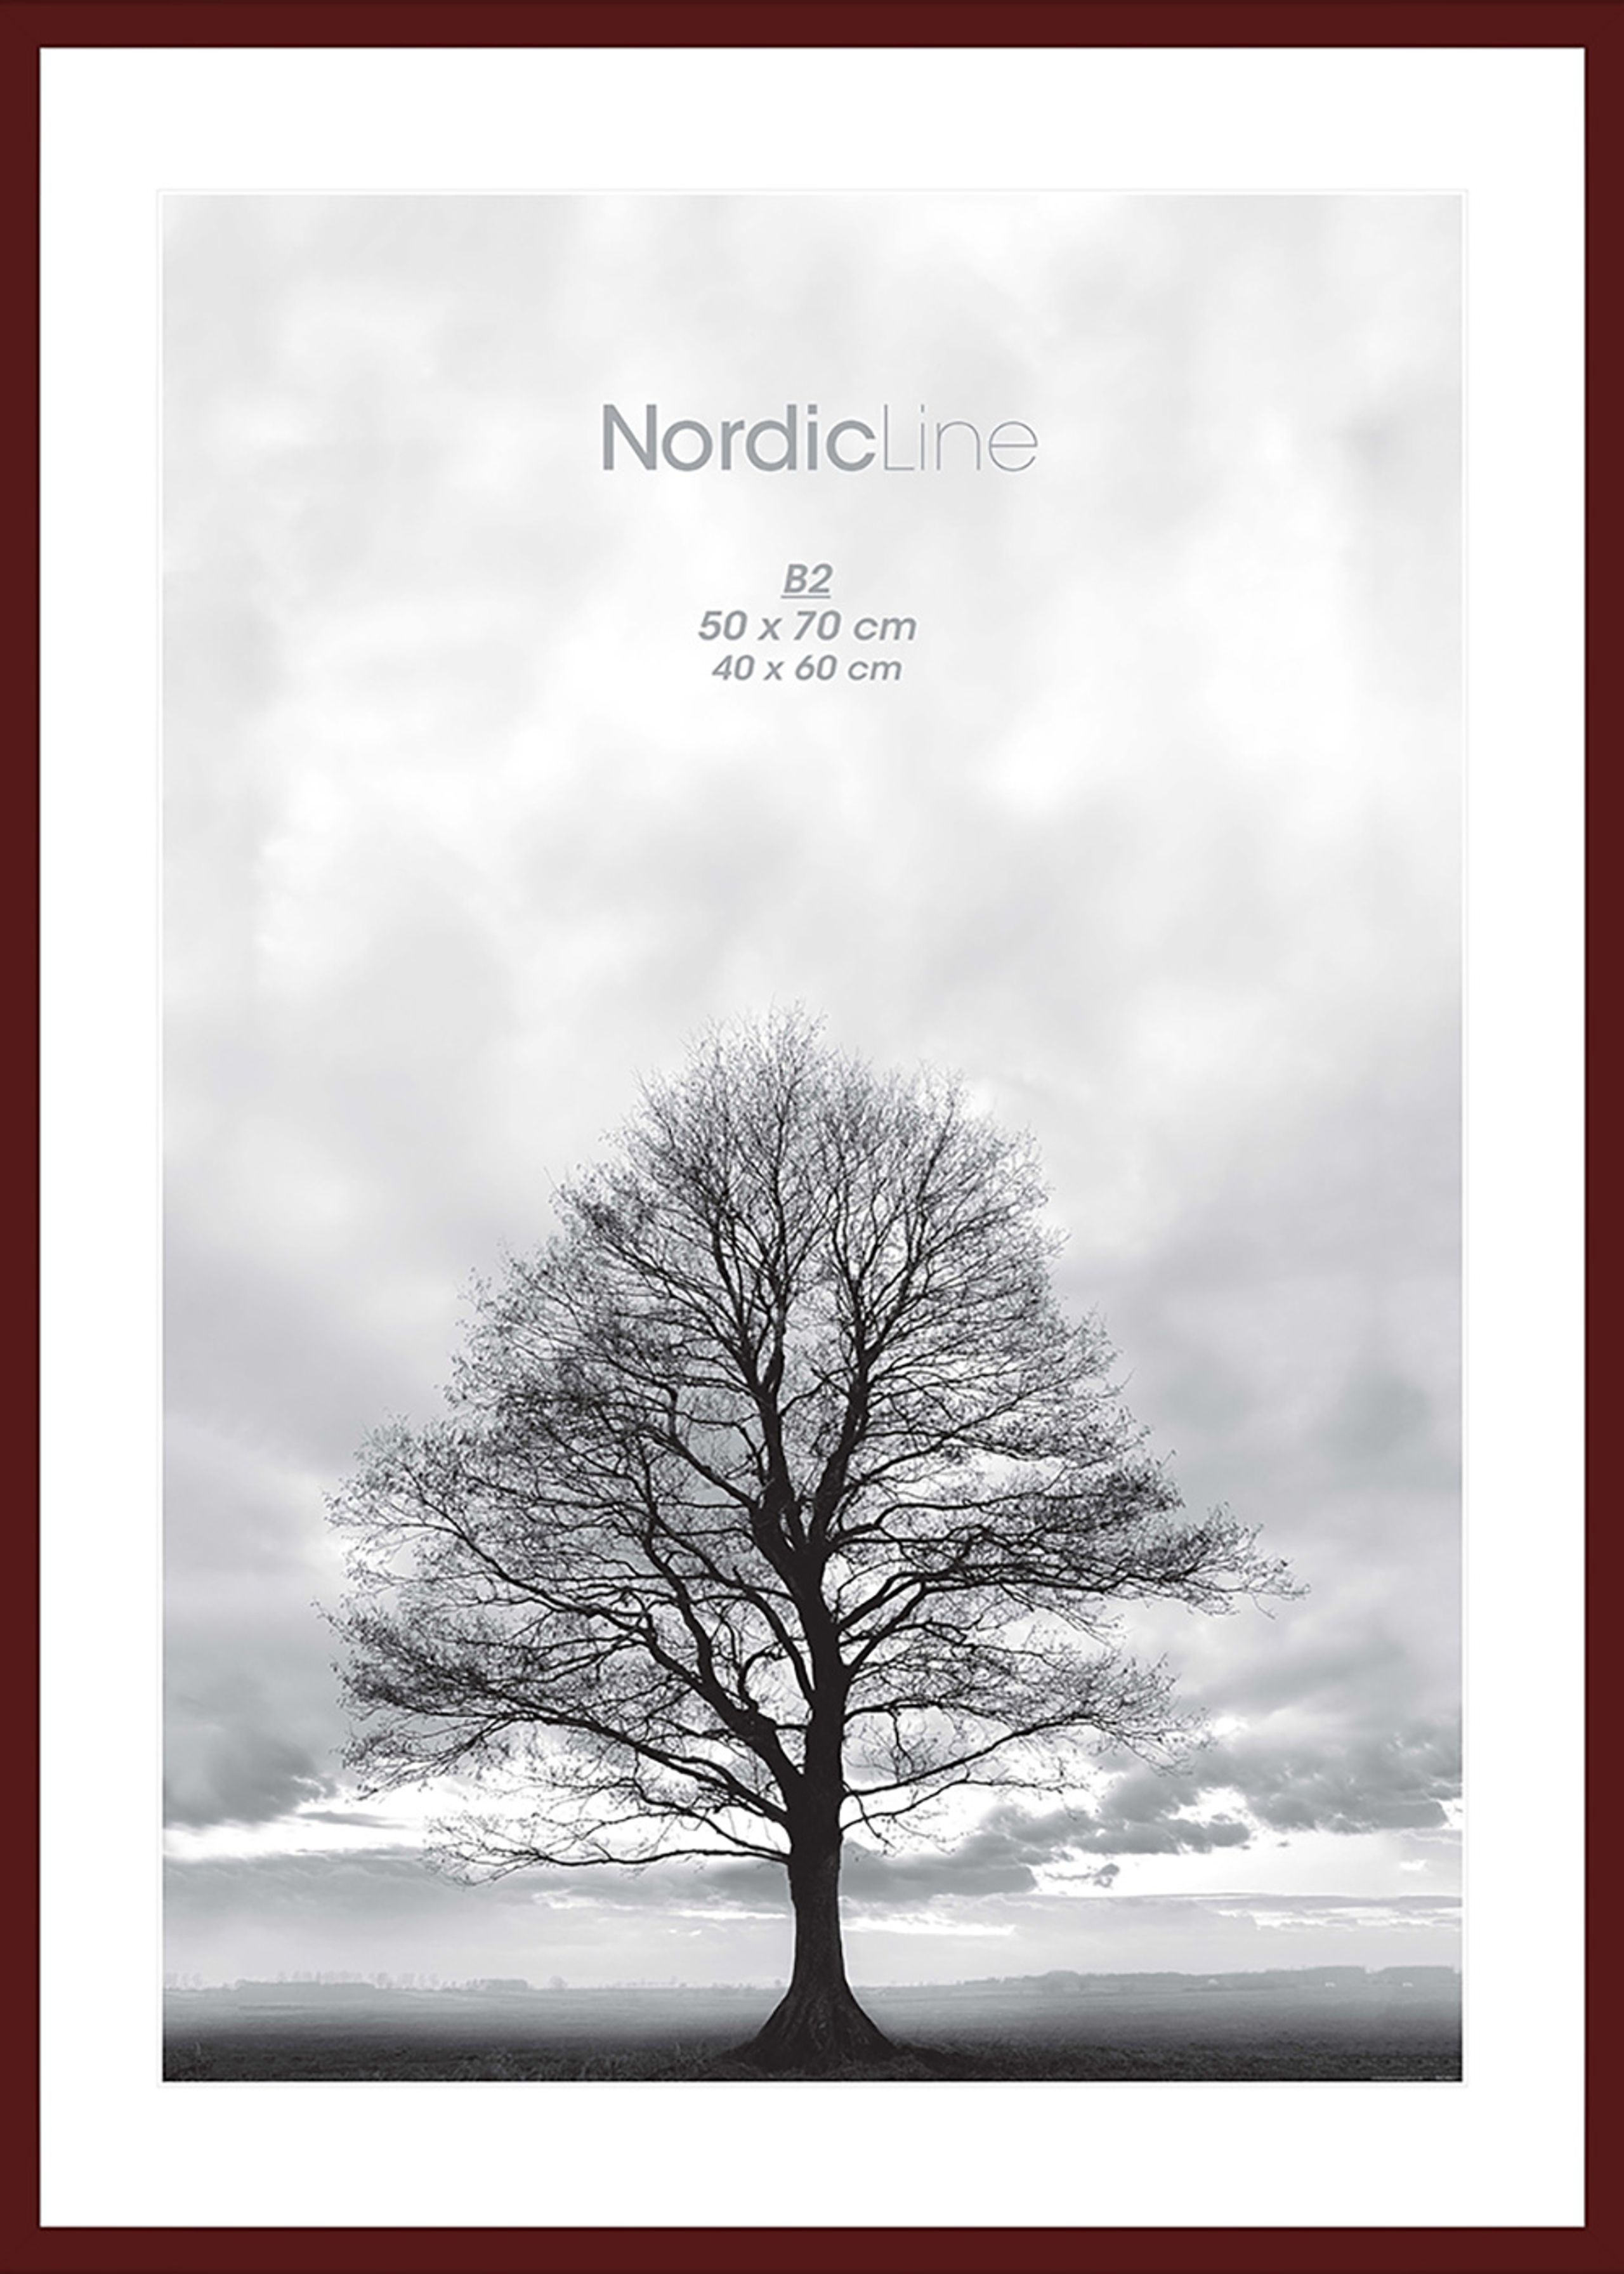 Nordic Line - Frames - Nordic Line frames - Redwine - Redwine